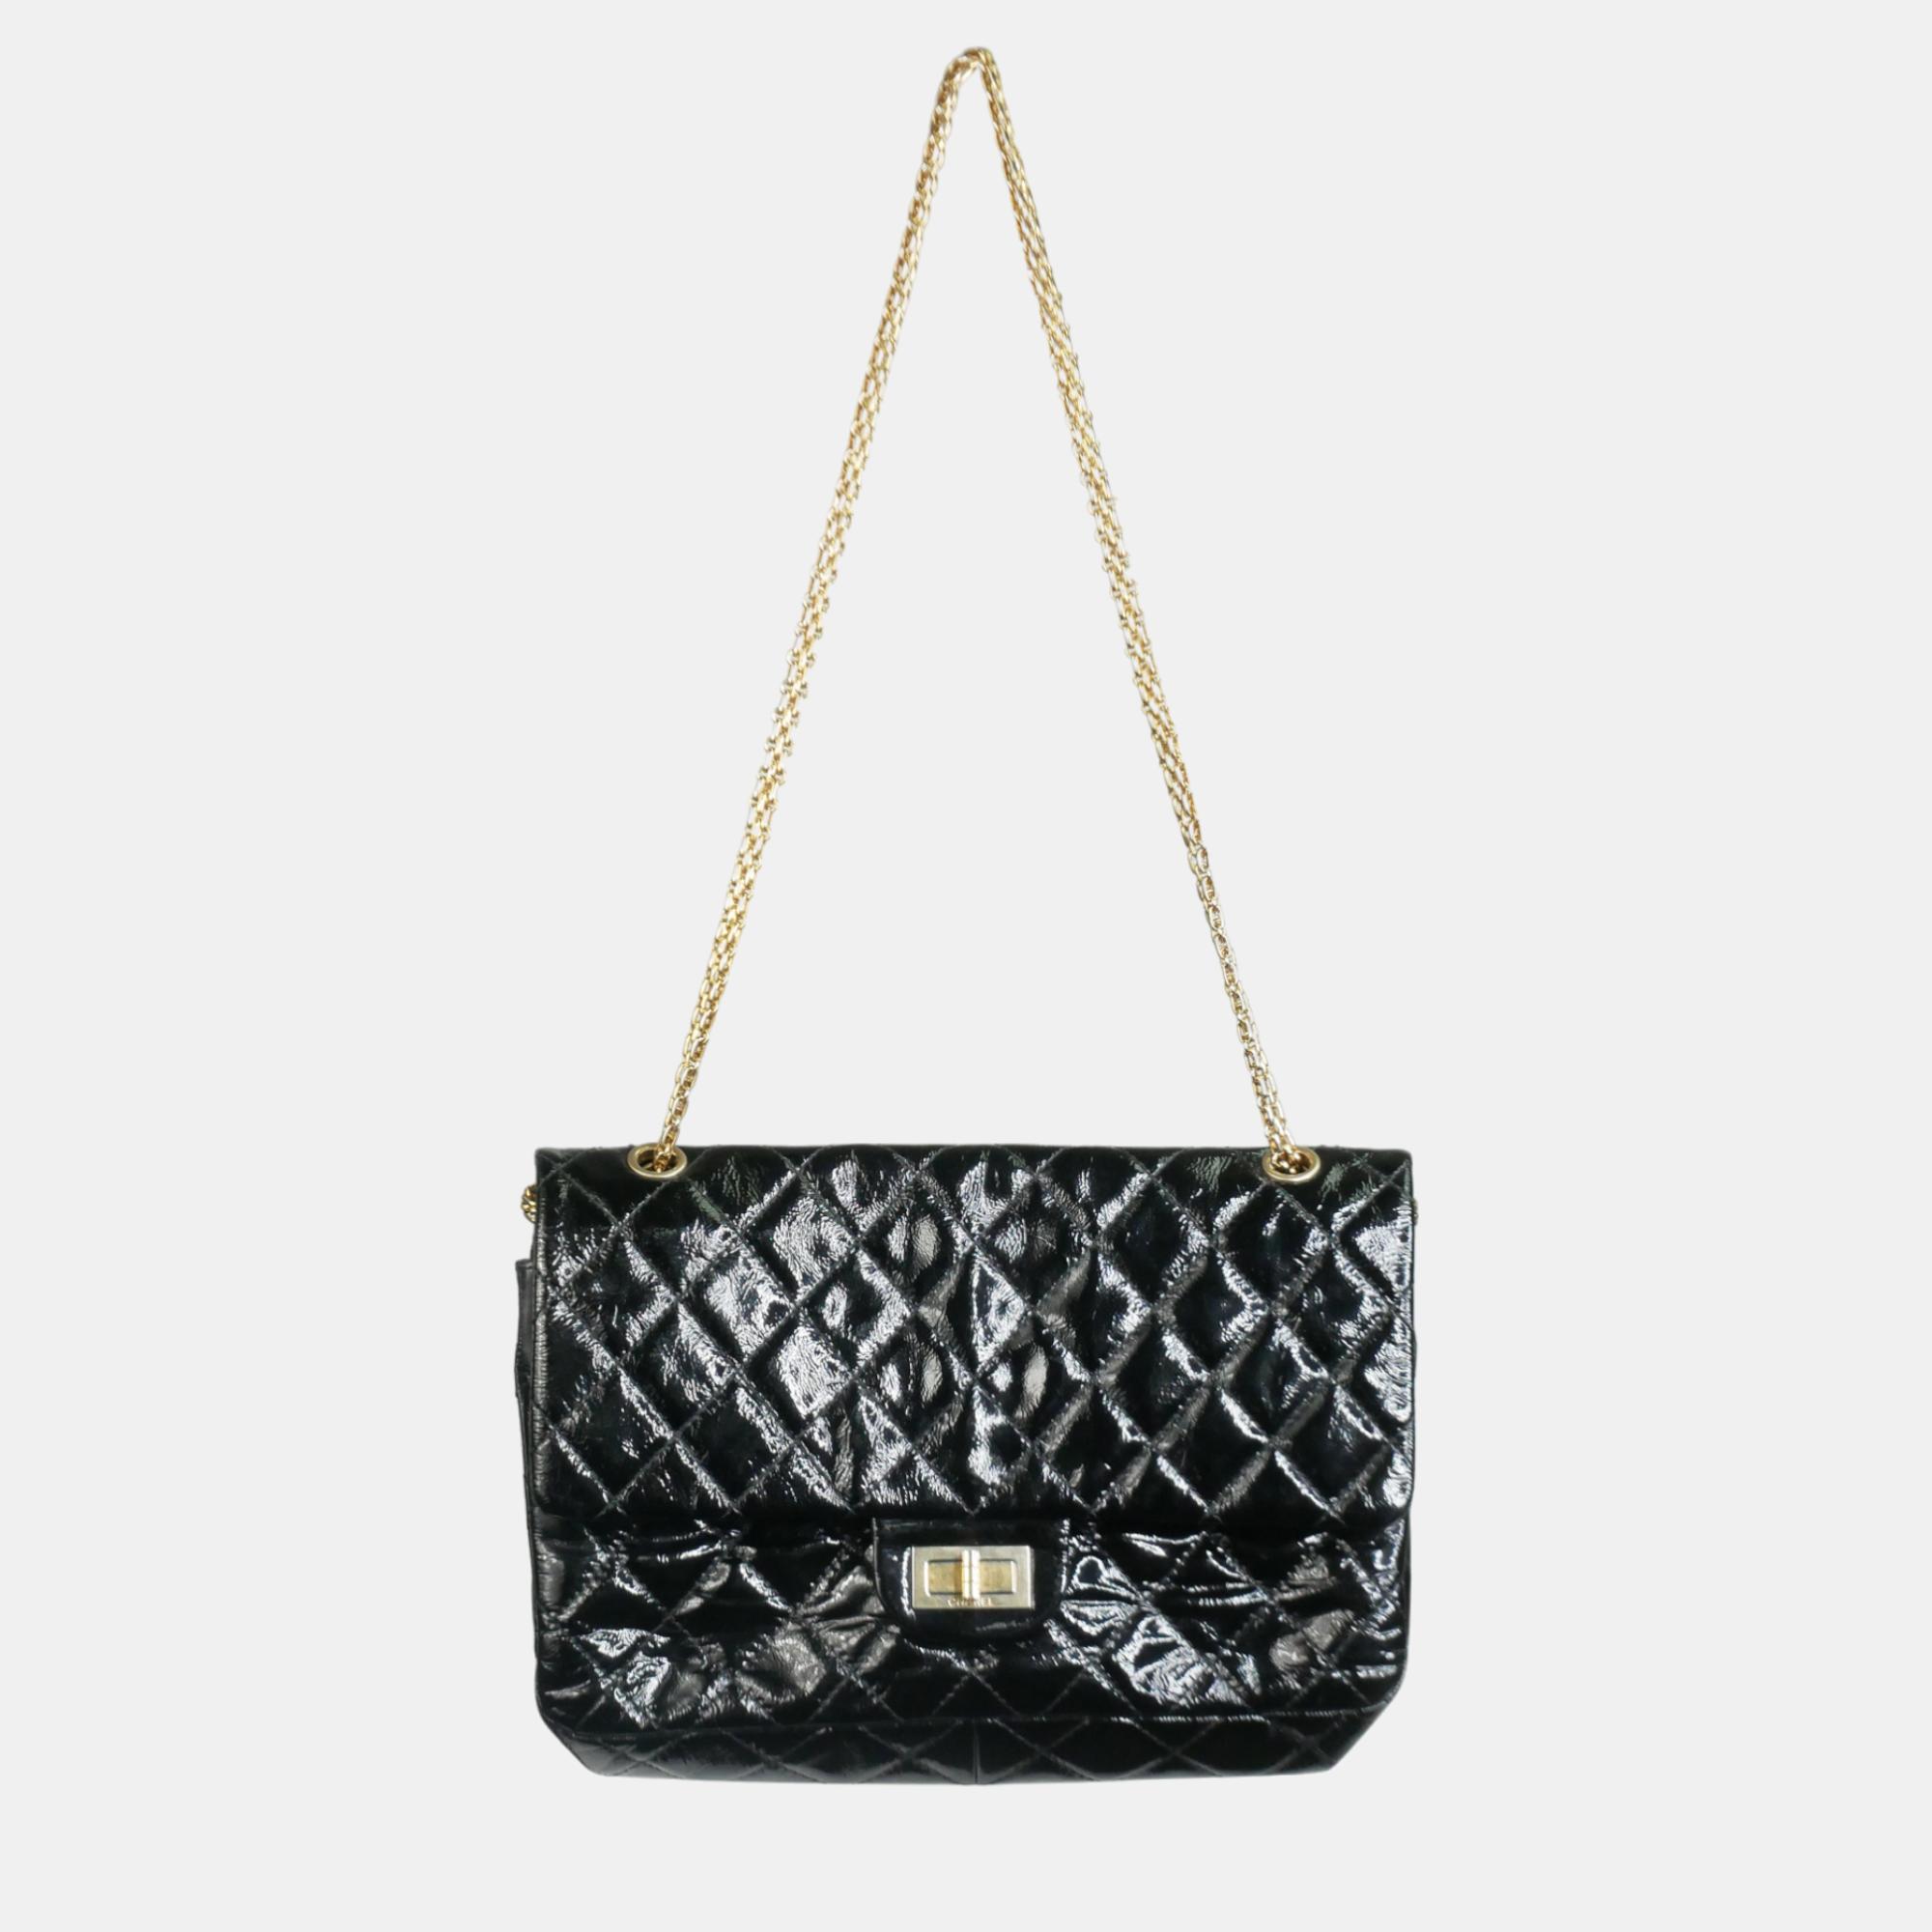 Chanel black patent leather reissue double flap bag